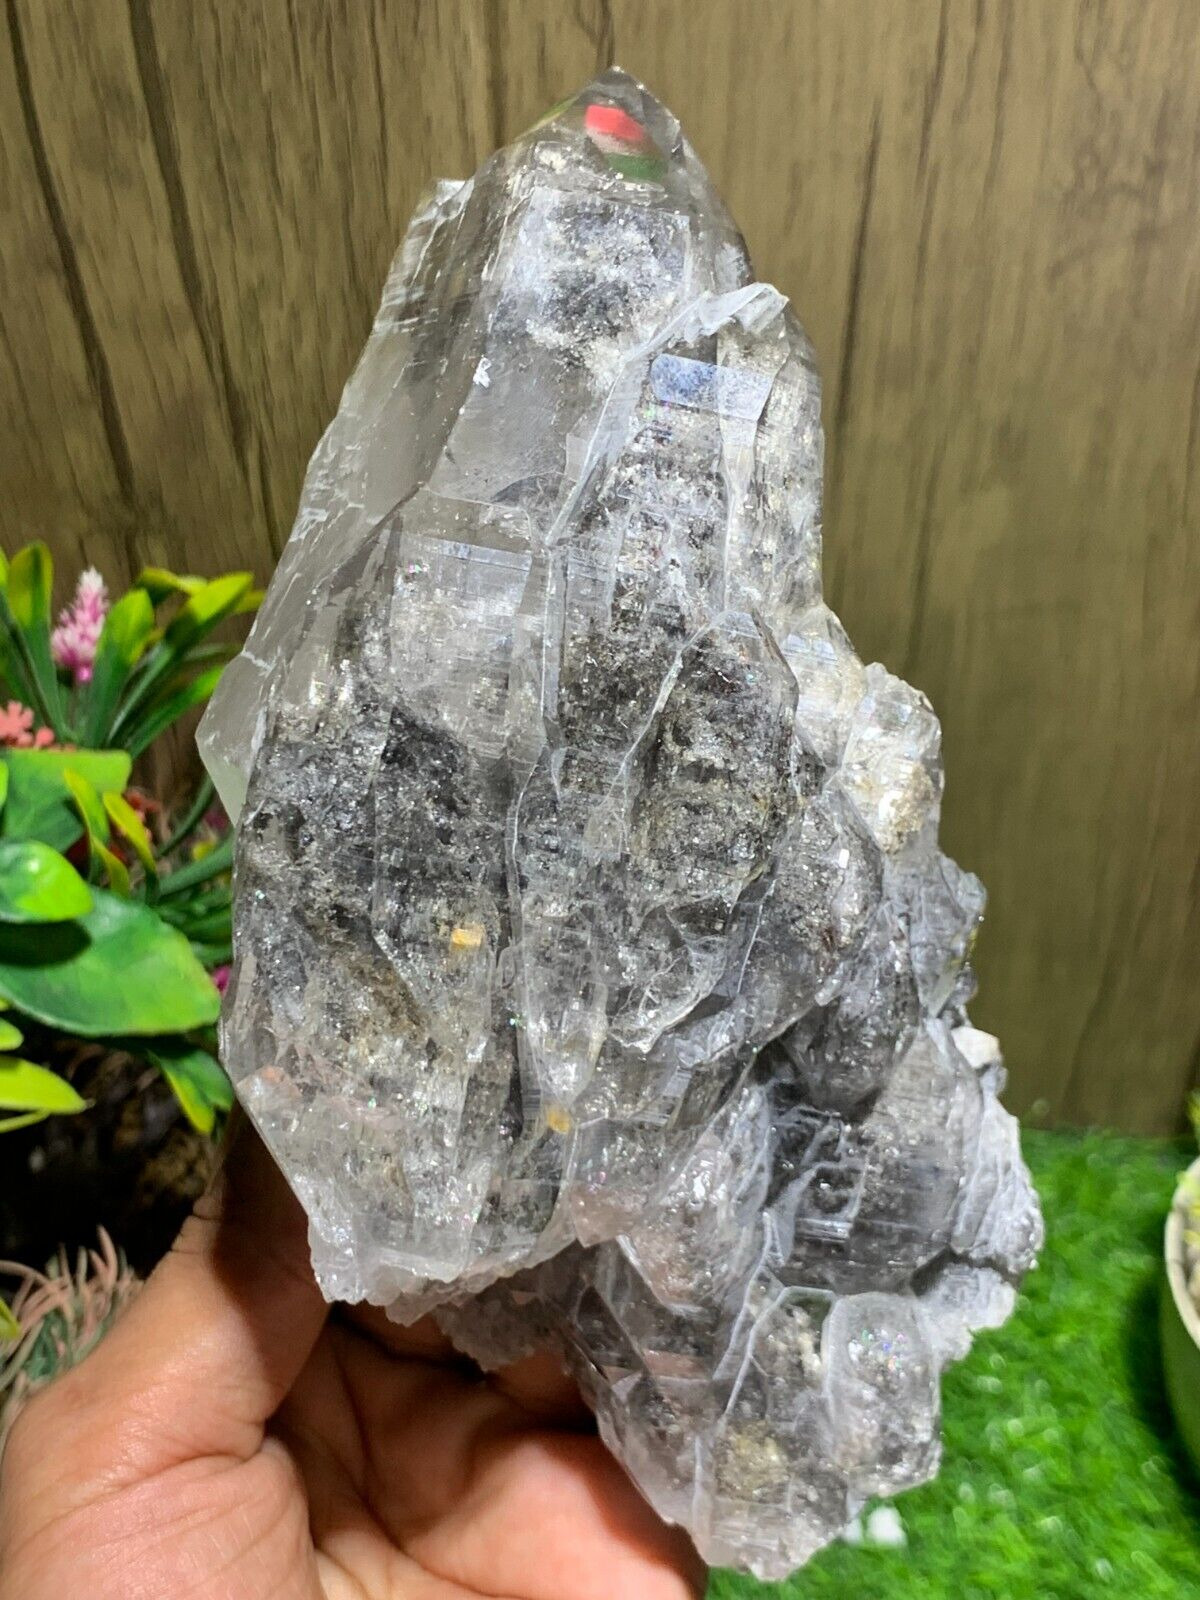 859 Gram Lithium Quartz Crystals Natural stone Mineral from Pakistan.